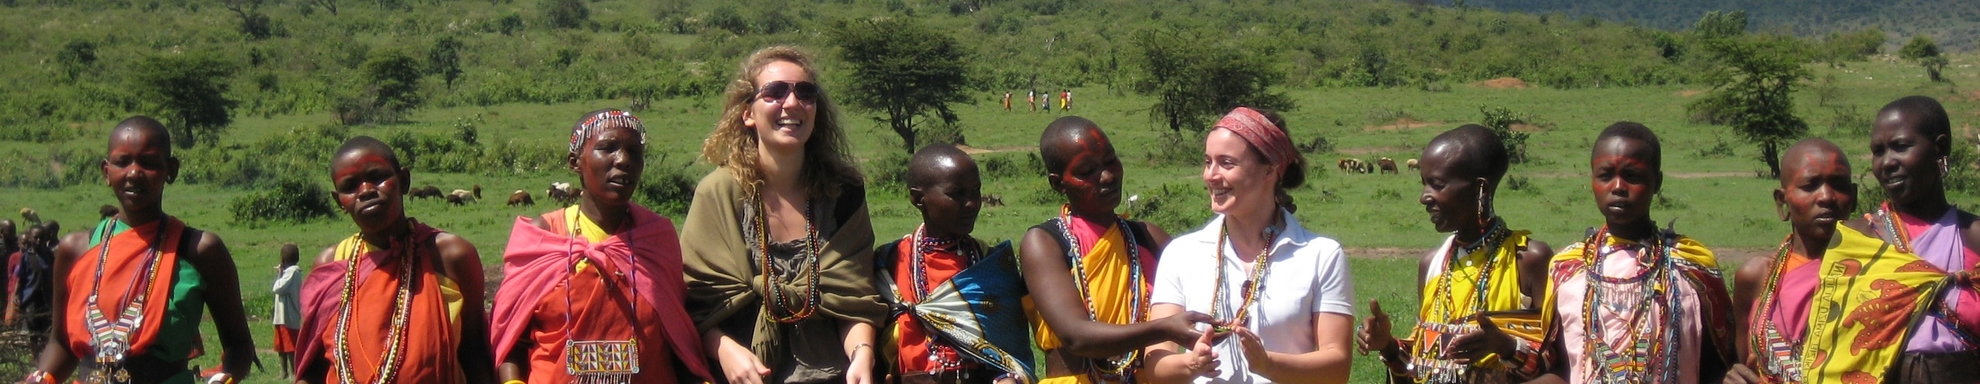 SASI tudy trip in Kenya